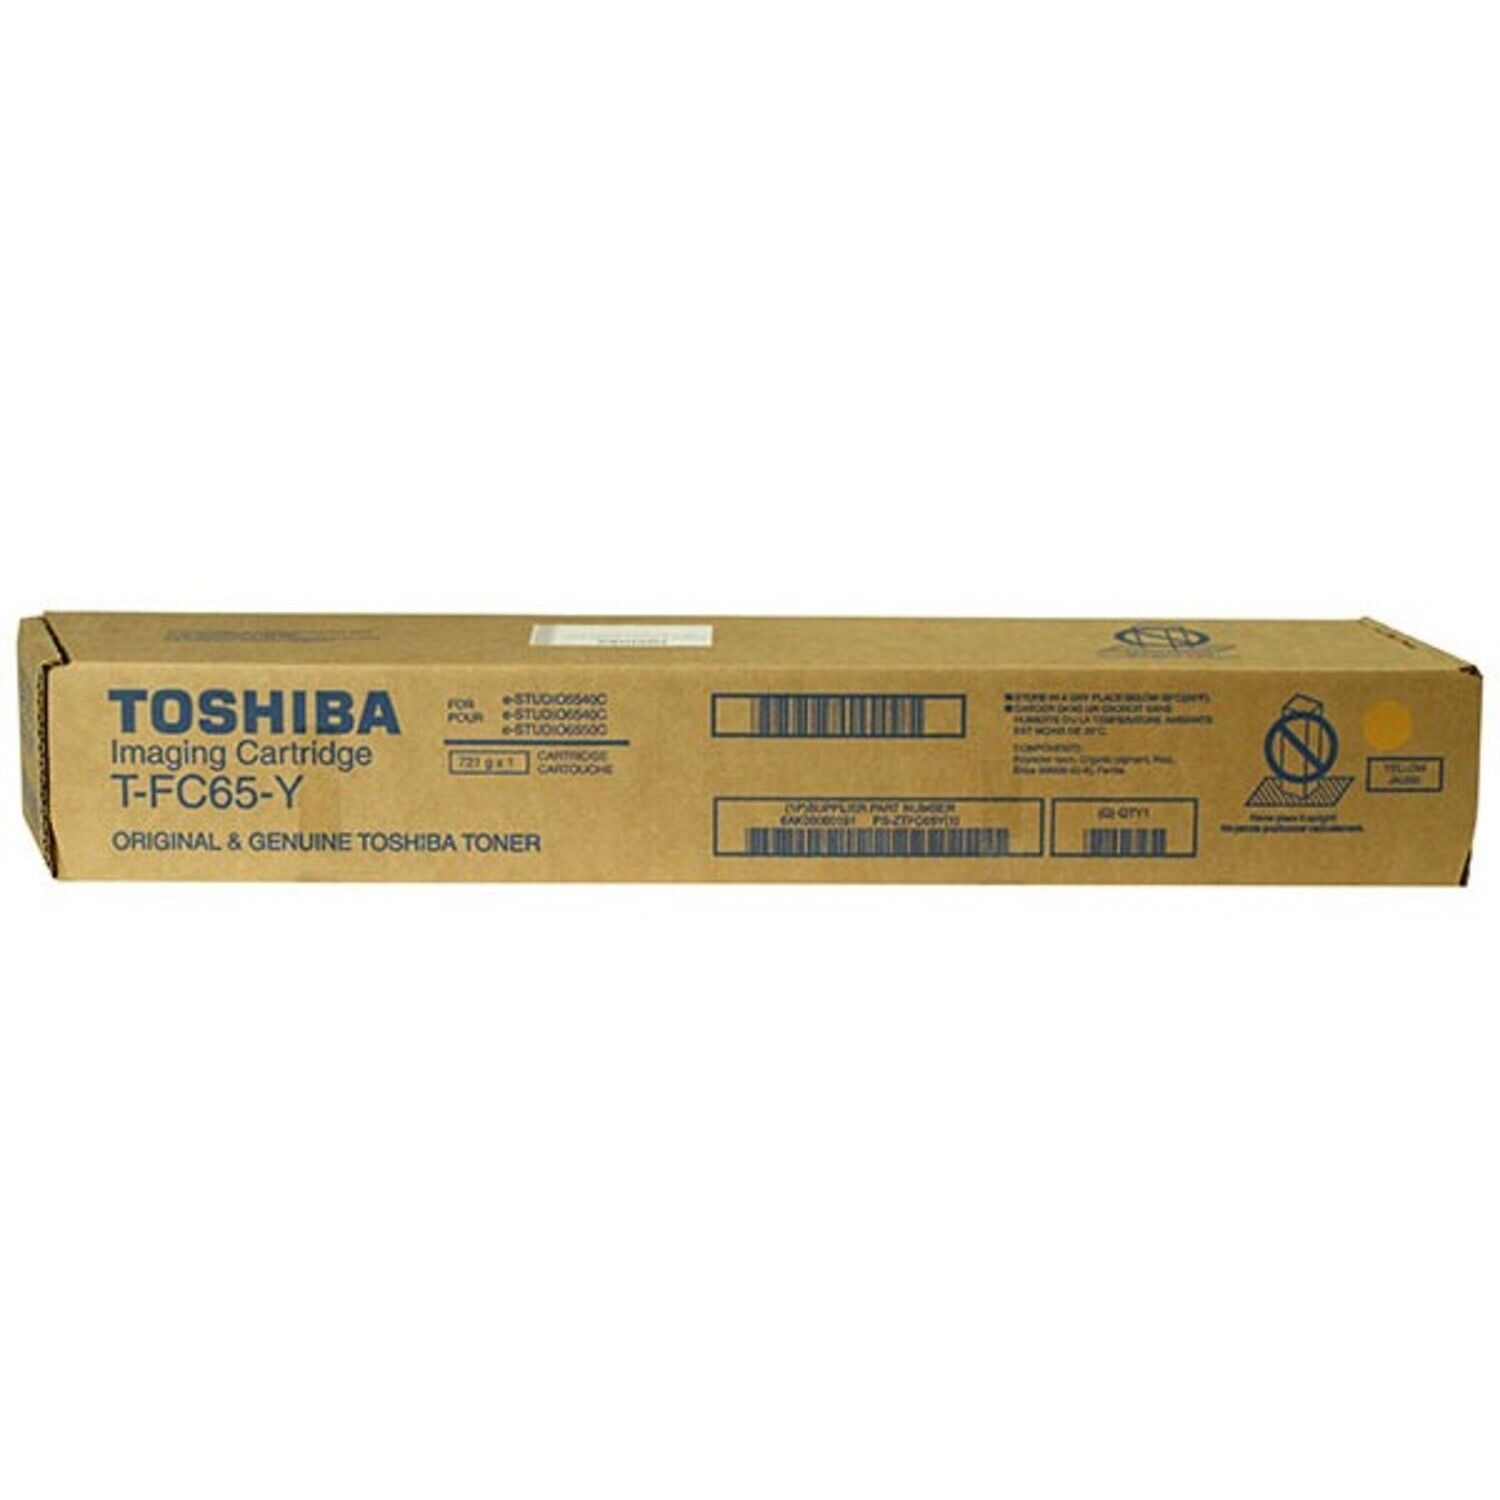 Genuine Toshiba T-FC65-Y Yellow Toner Cartridge